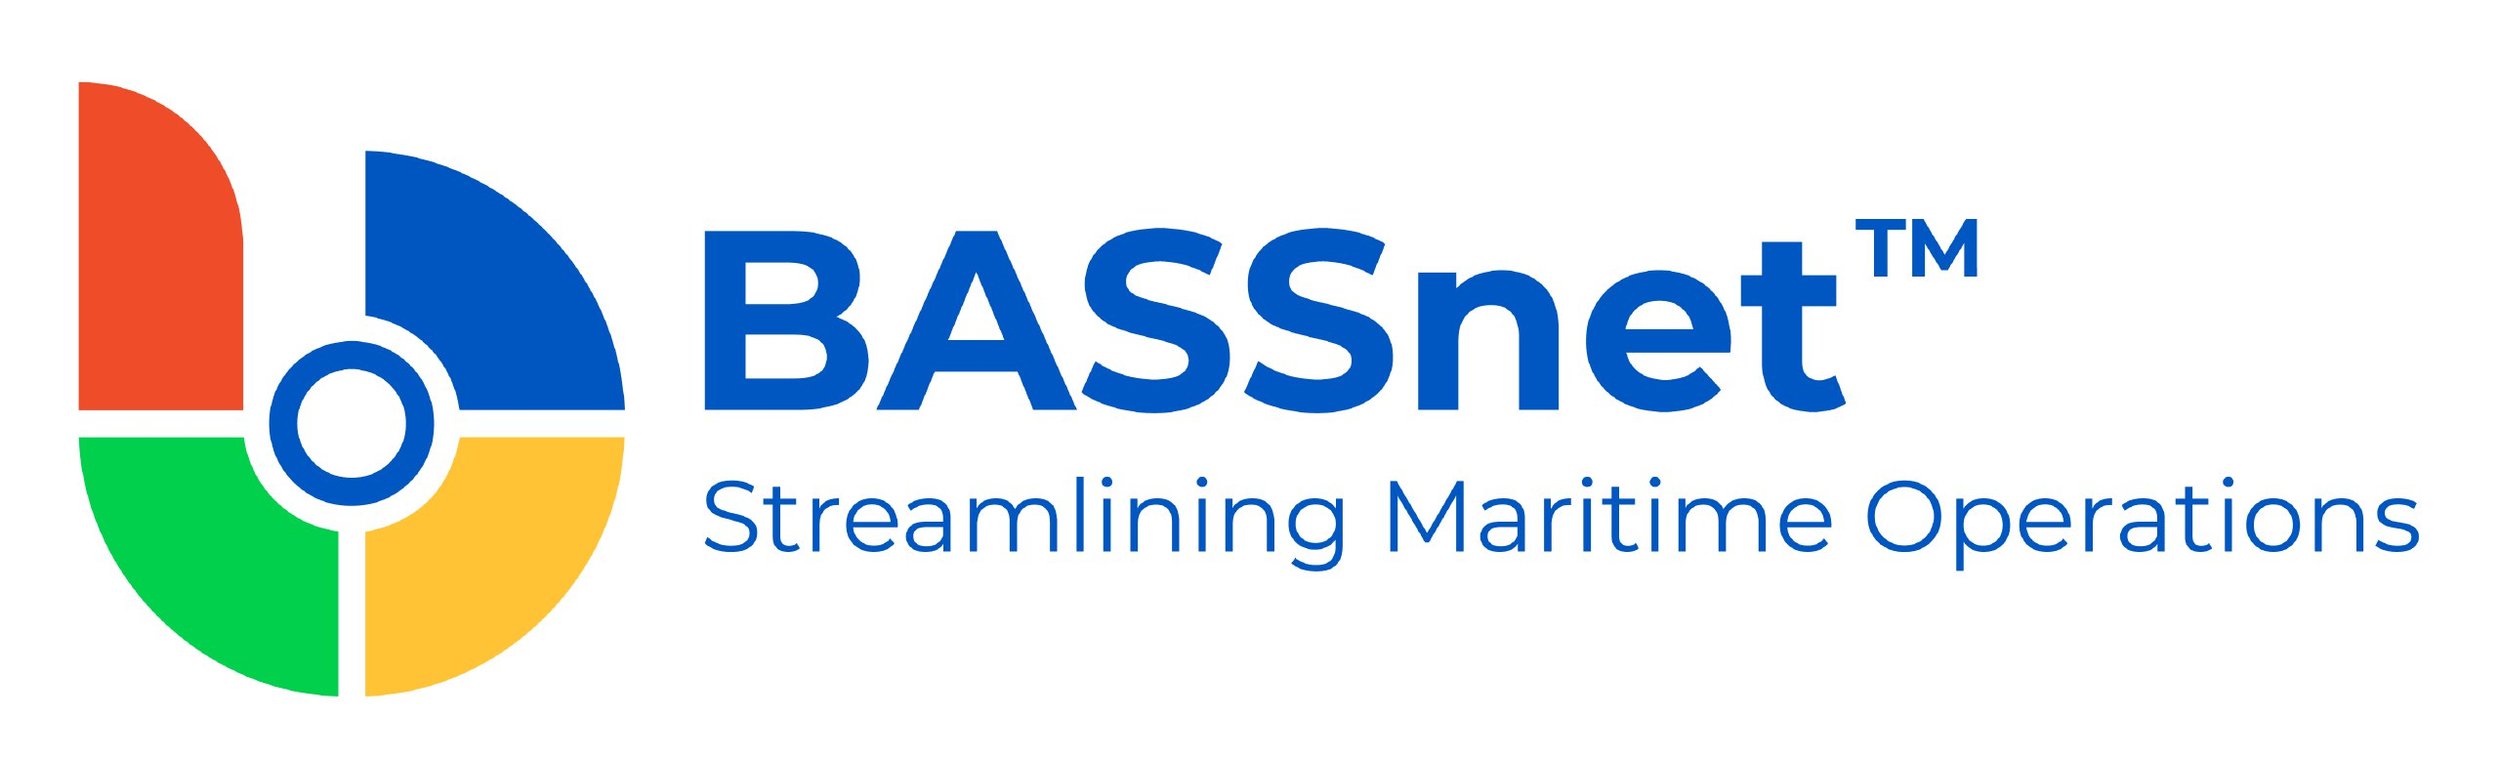 bassnet logo.jpeg